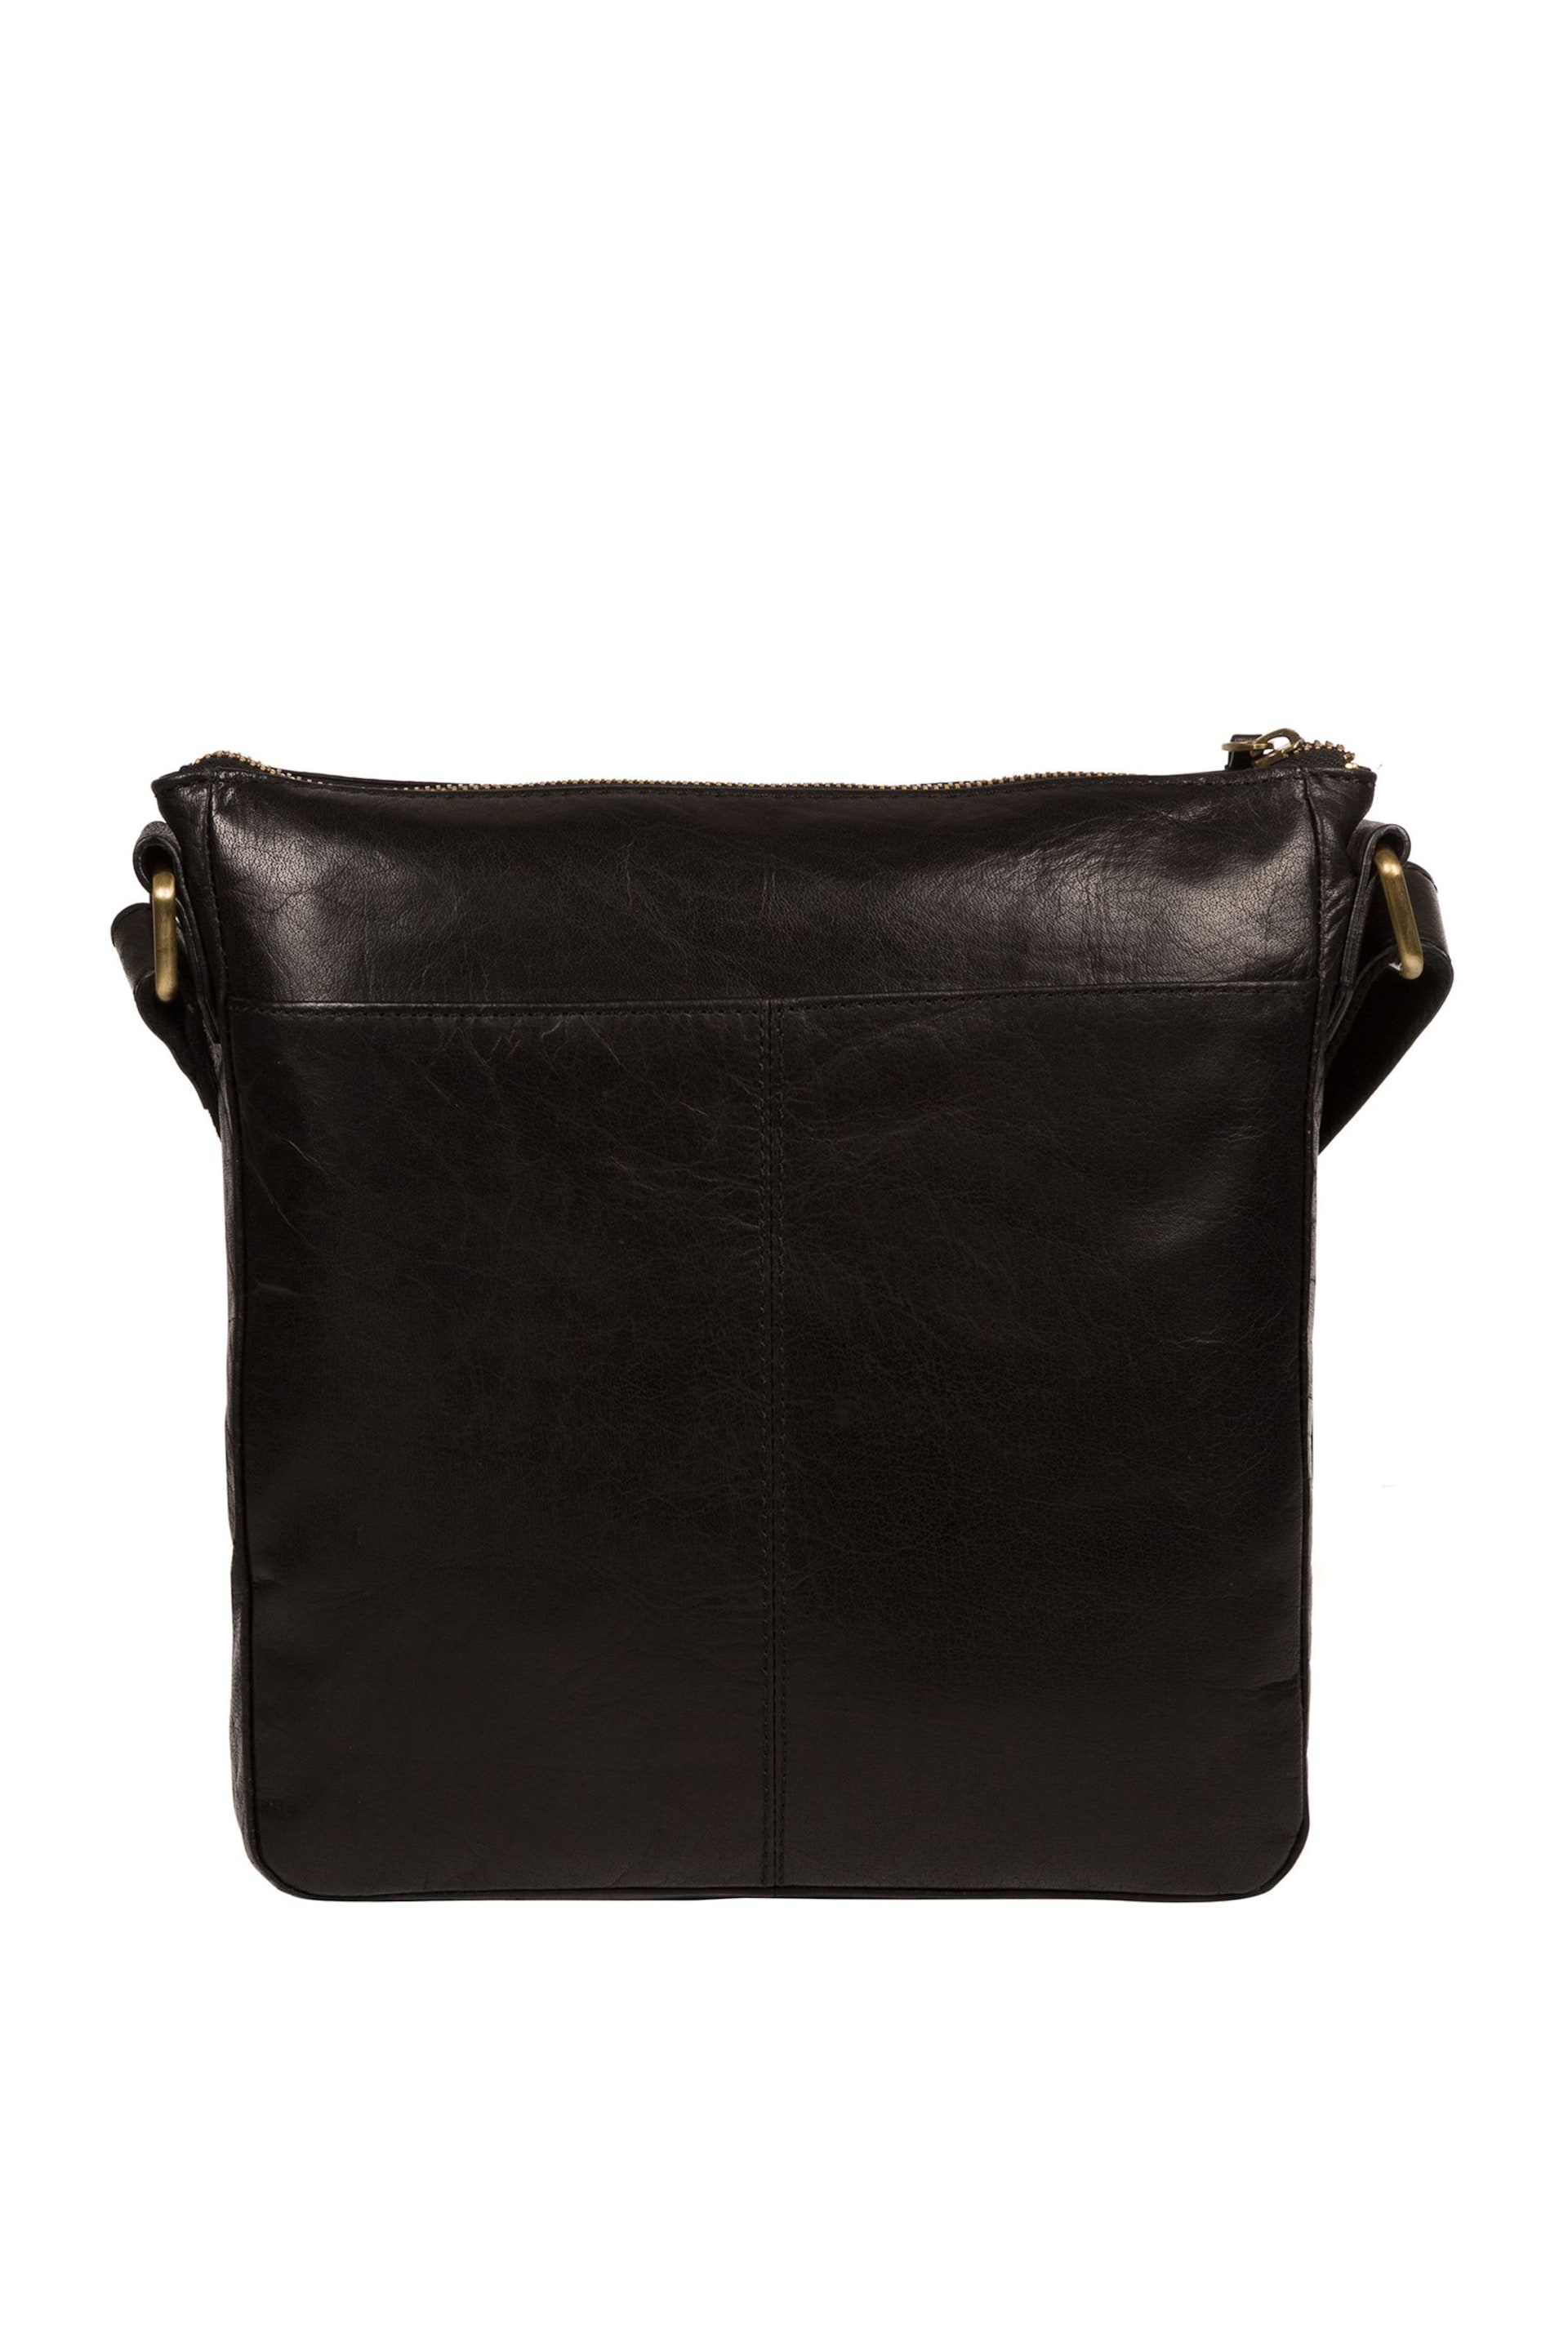 Conkca Josephine Leather Shoulder Bag - Image 3 of 5